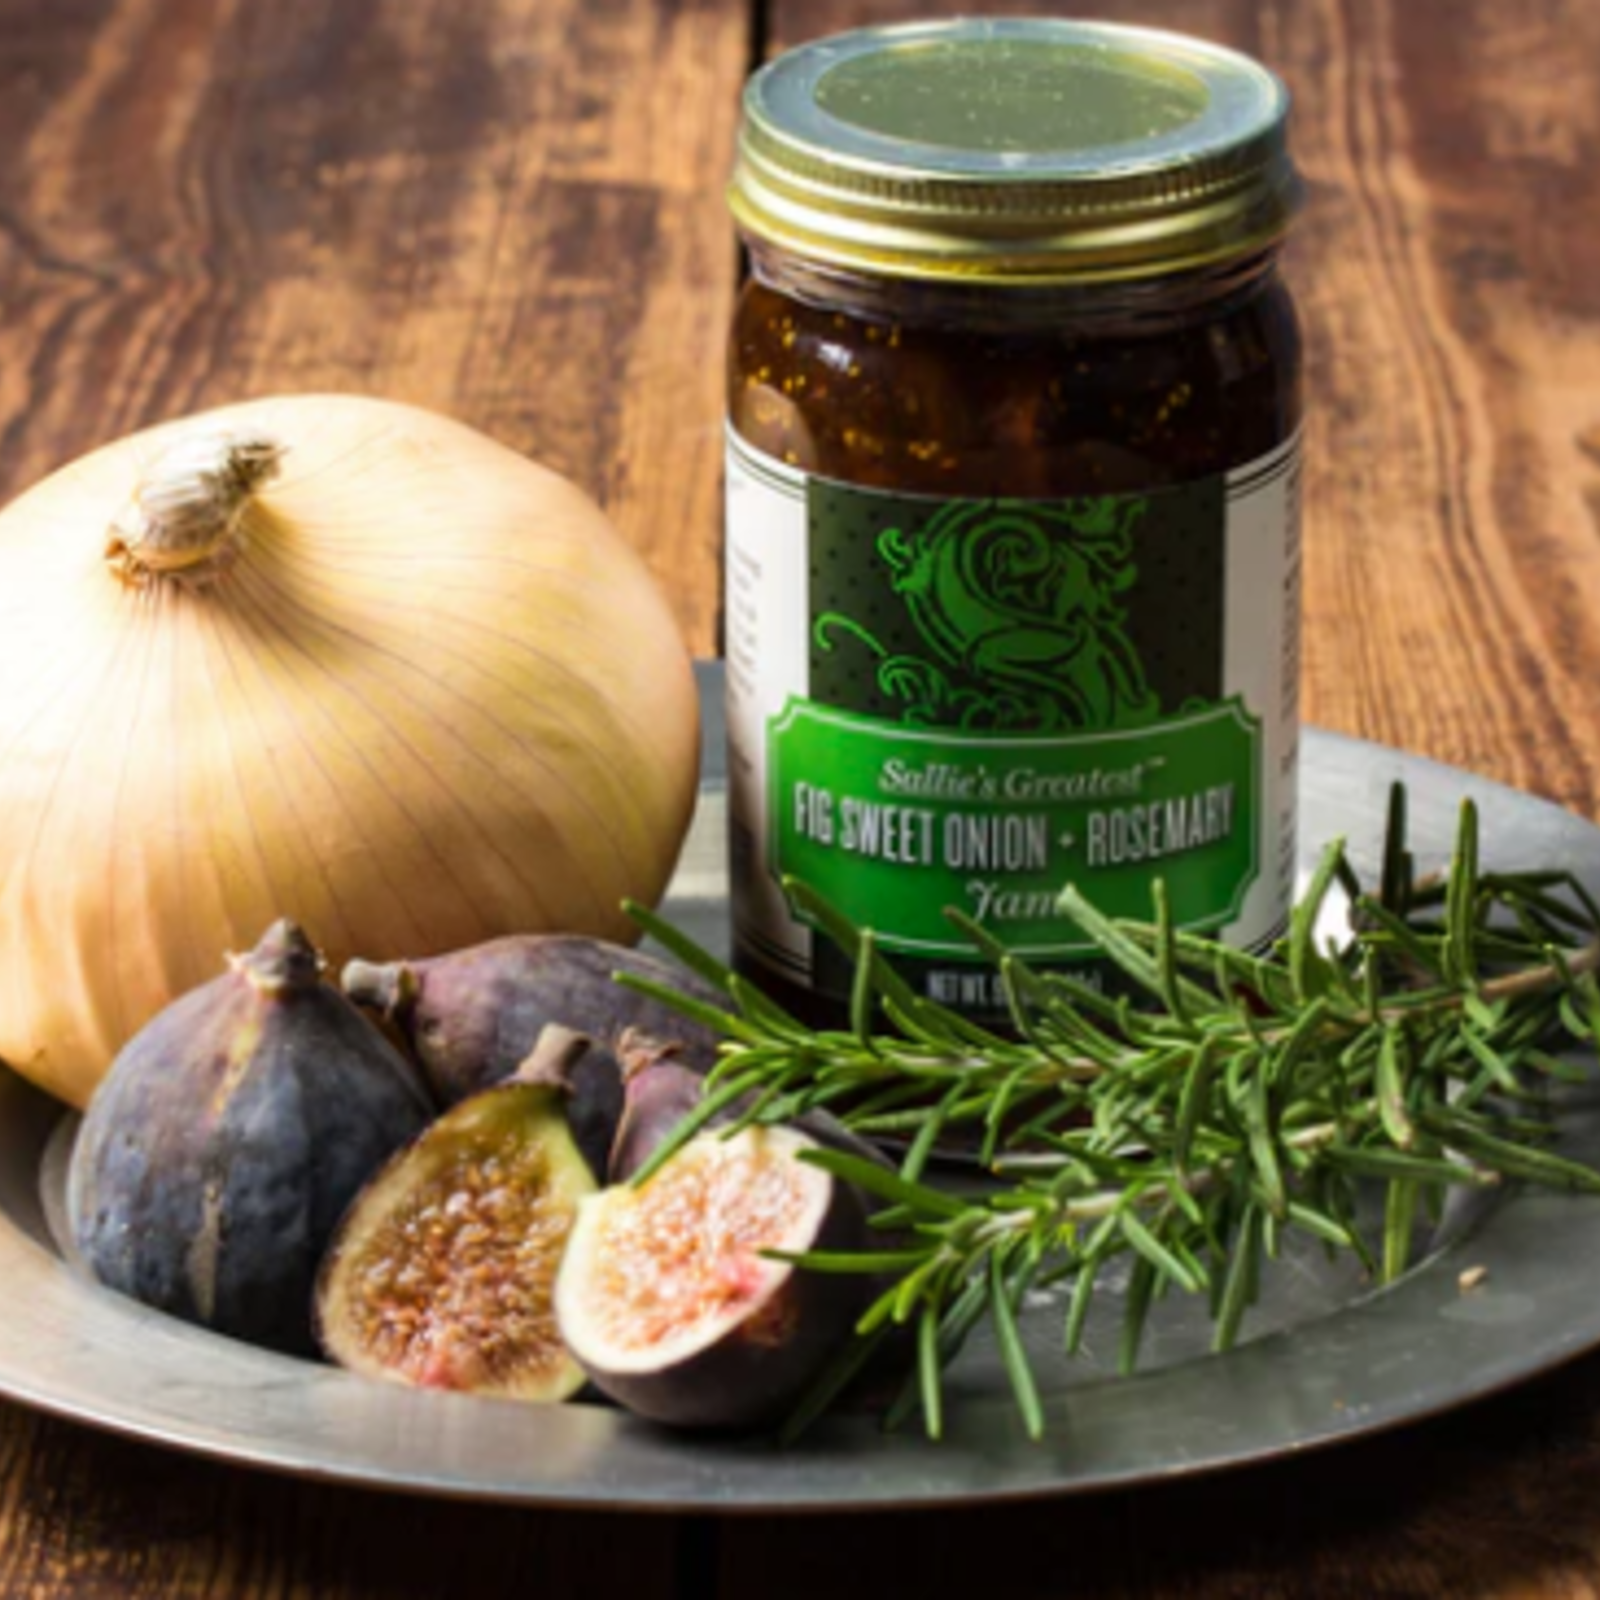 Sallie's Greatest Fig Sweet Onion & Rosemary Jam loading=